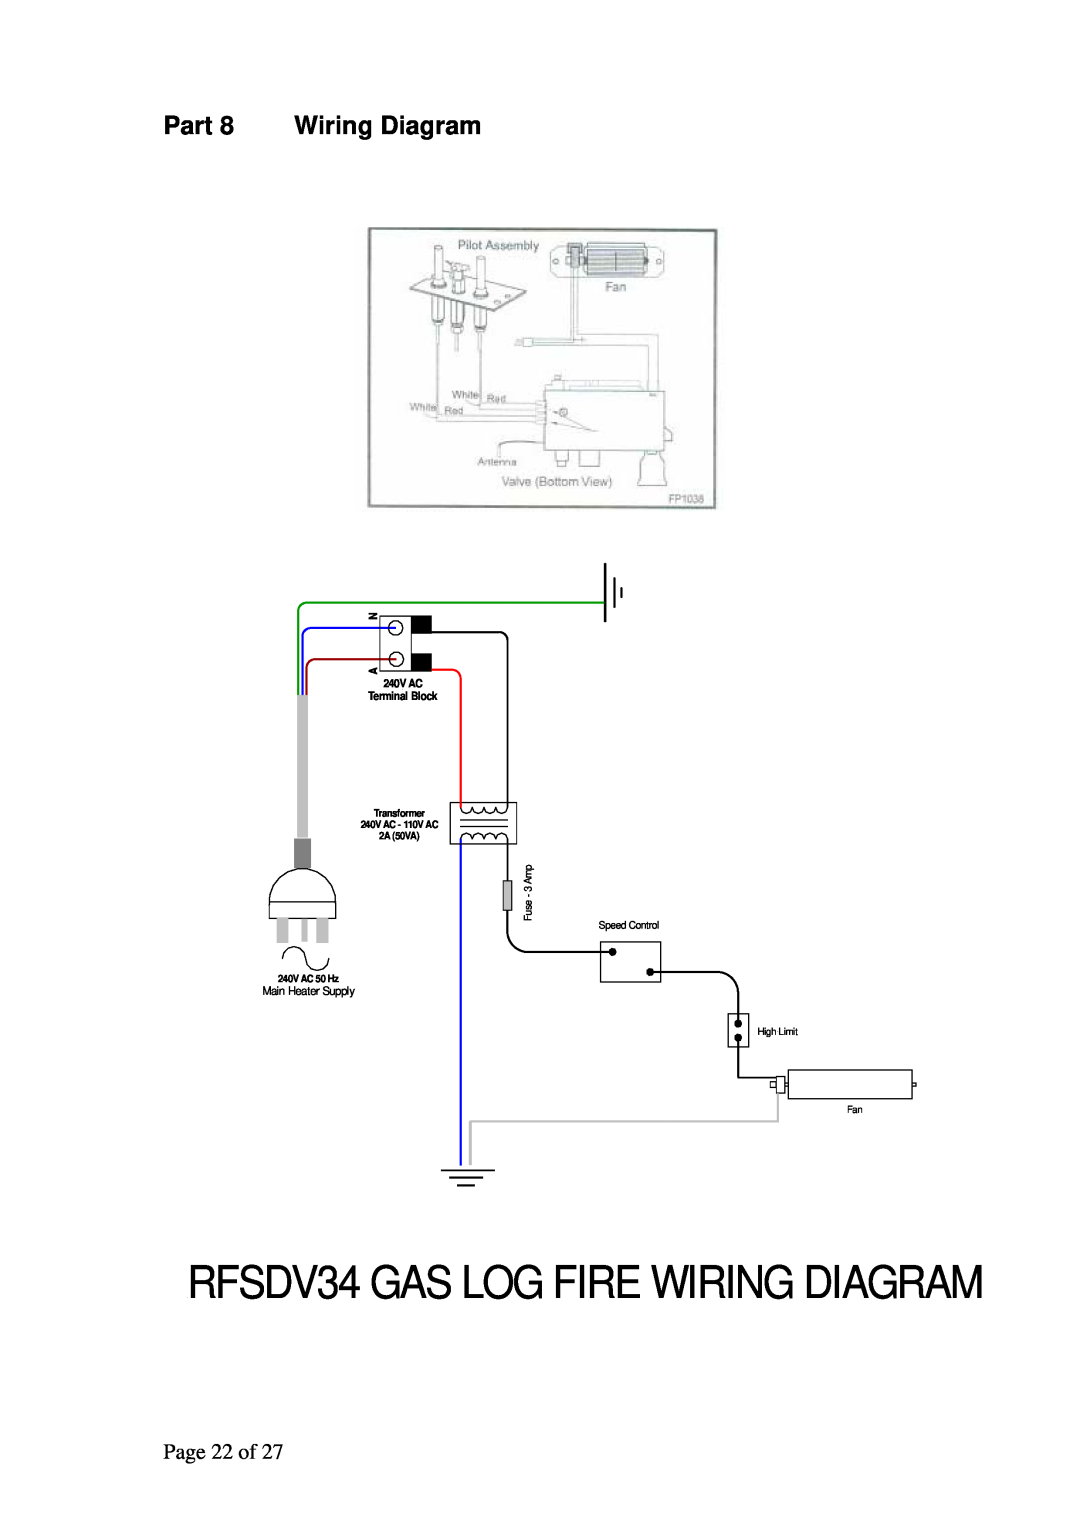 Raypak RFSDV34RFNAU manual Part 8 Wiring Diagram, RFSDV34 GAS LOG FIRE WIRING DIAGRAM, Page 22 of, Main Heater Supply 